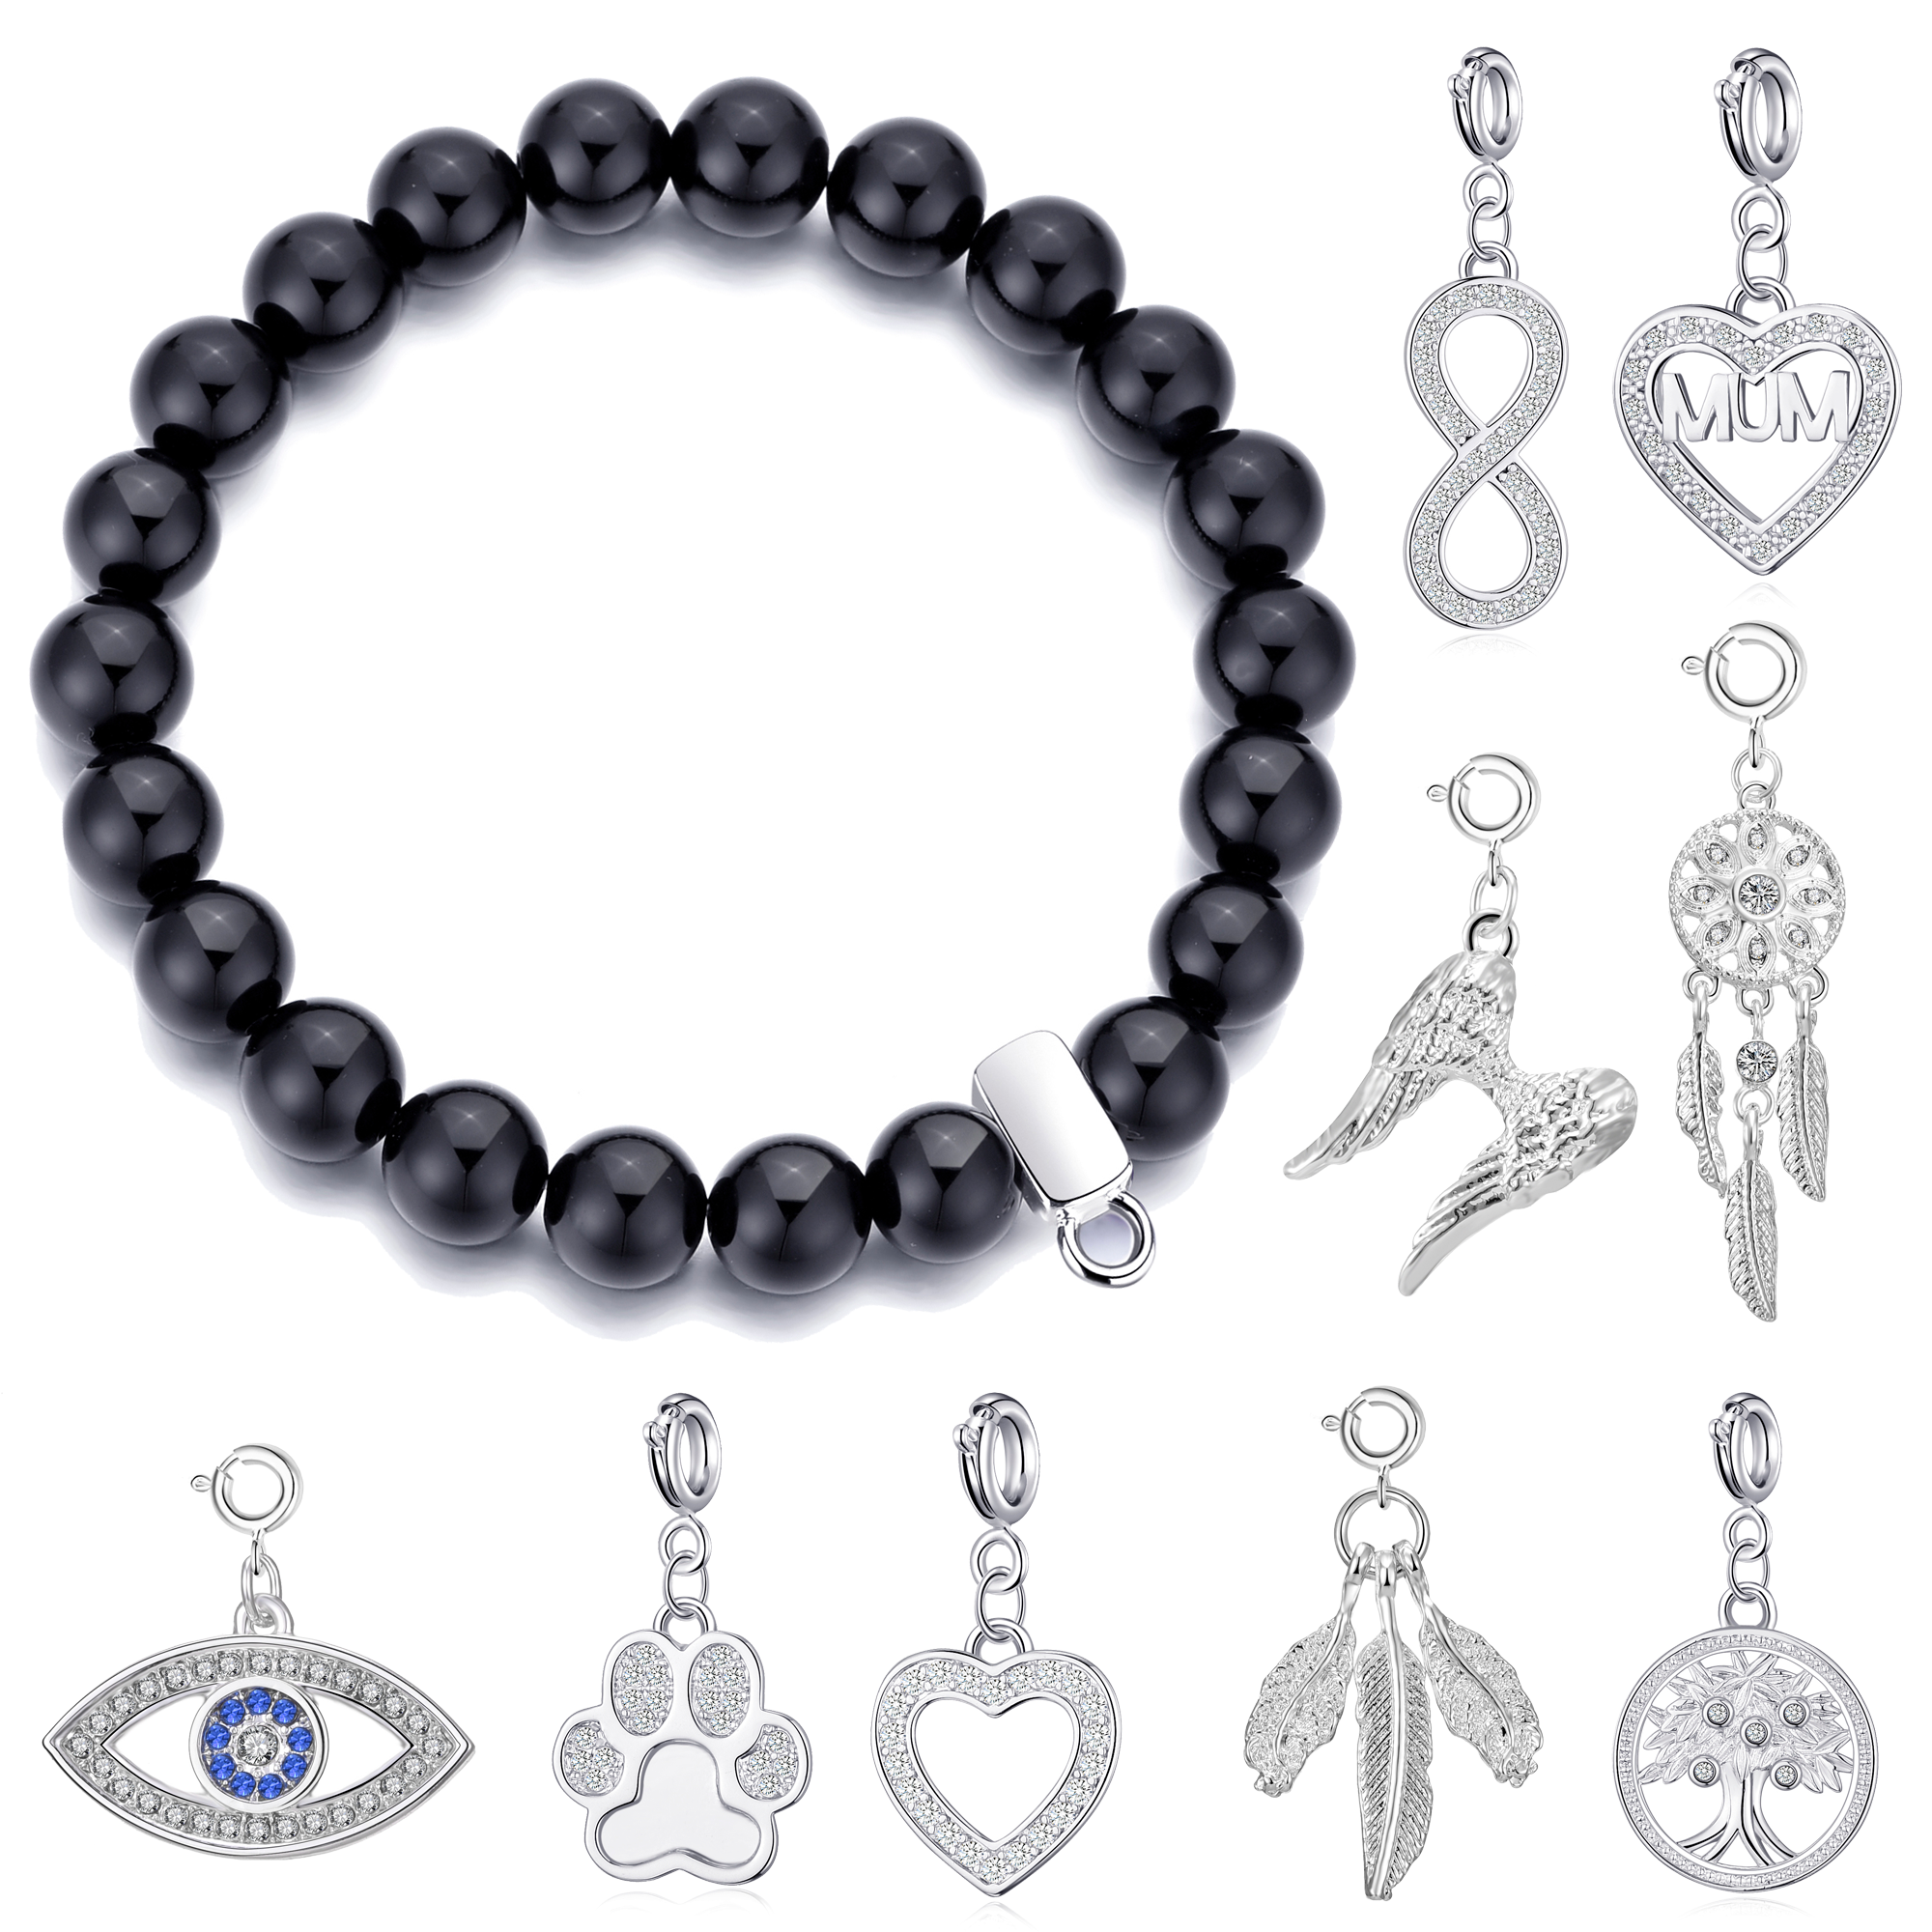 Black Onyx Gemstone Stretch Bracelet with Charm Created with Zircondia® Crystals by Philip Jones Jewellery